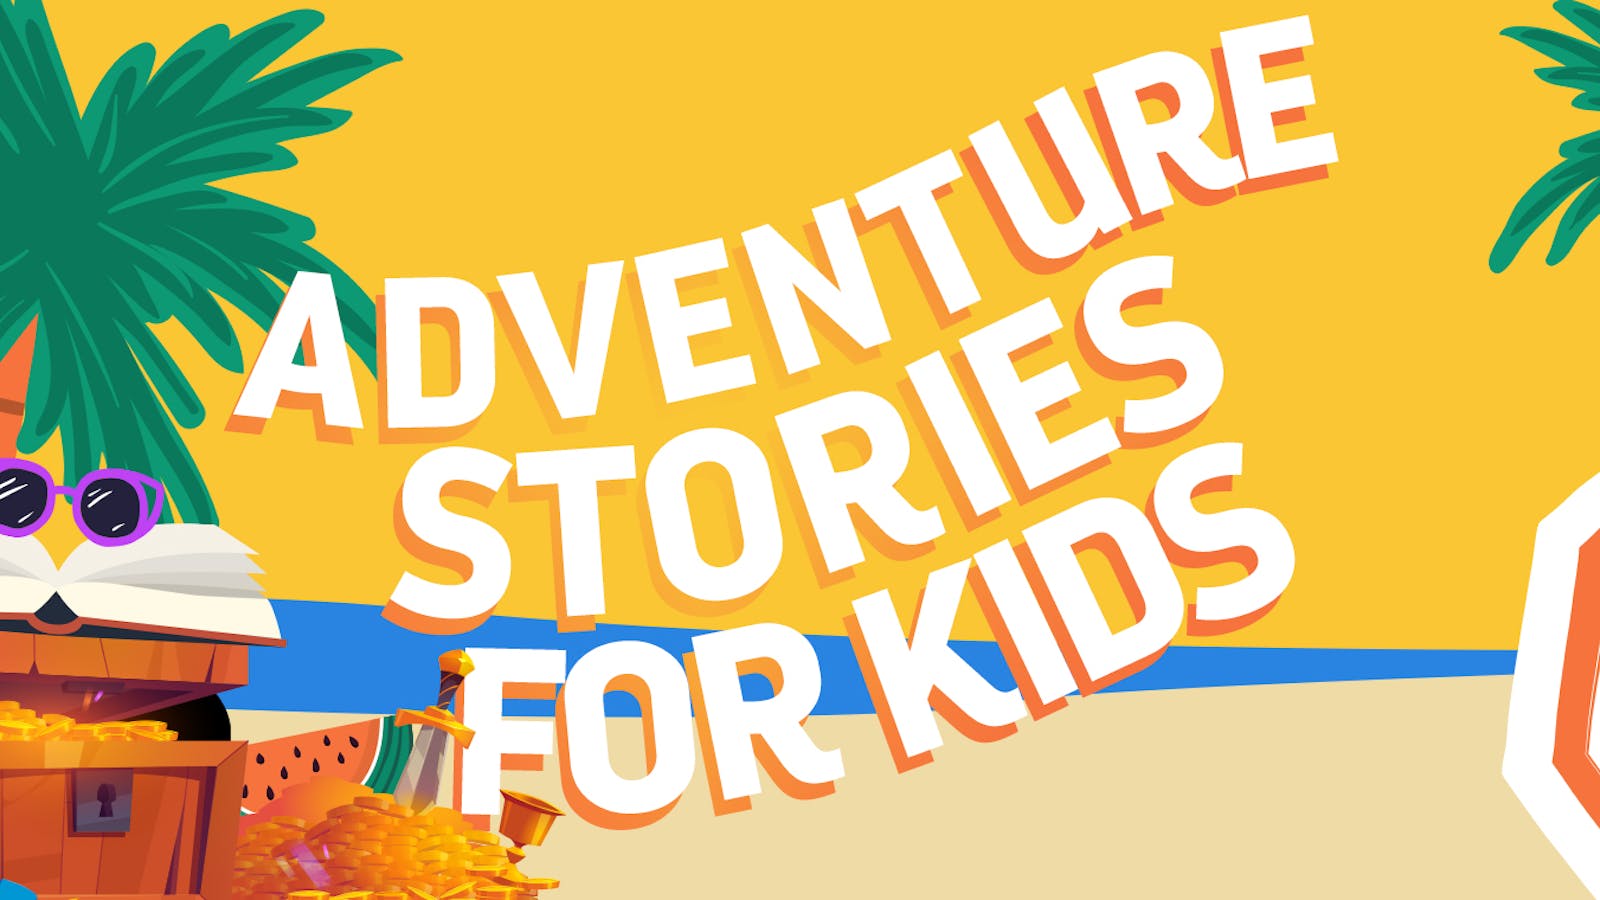 Adventure Stories for Kids - Hachette Australia